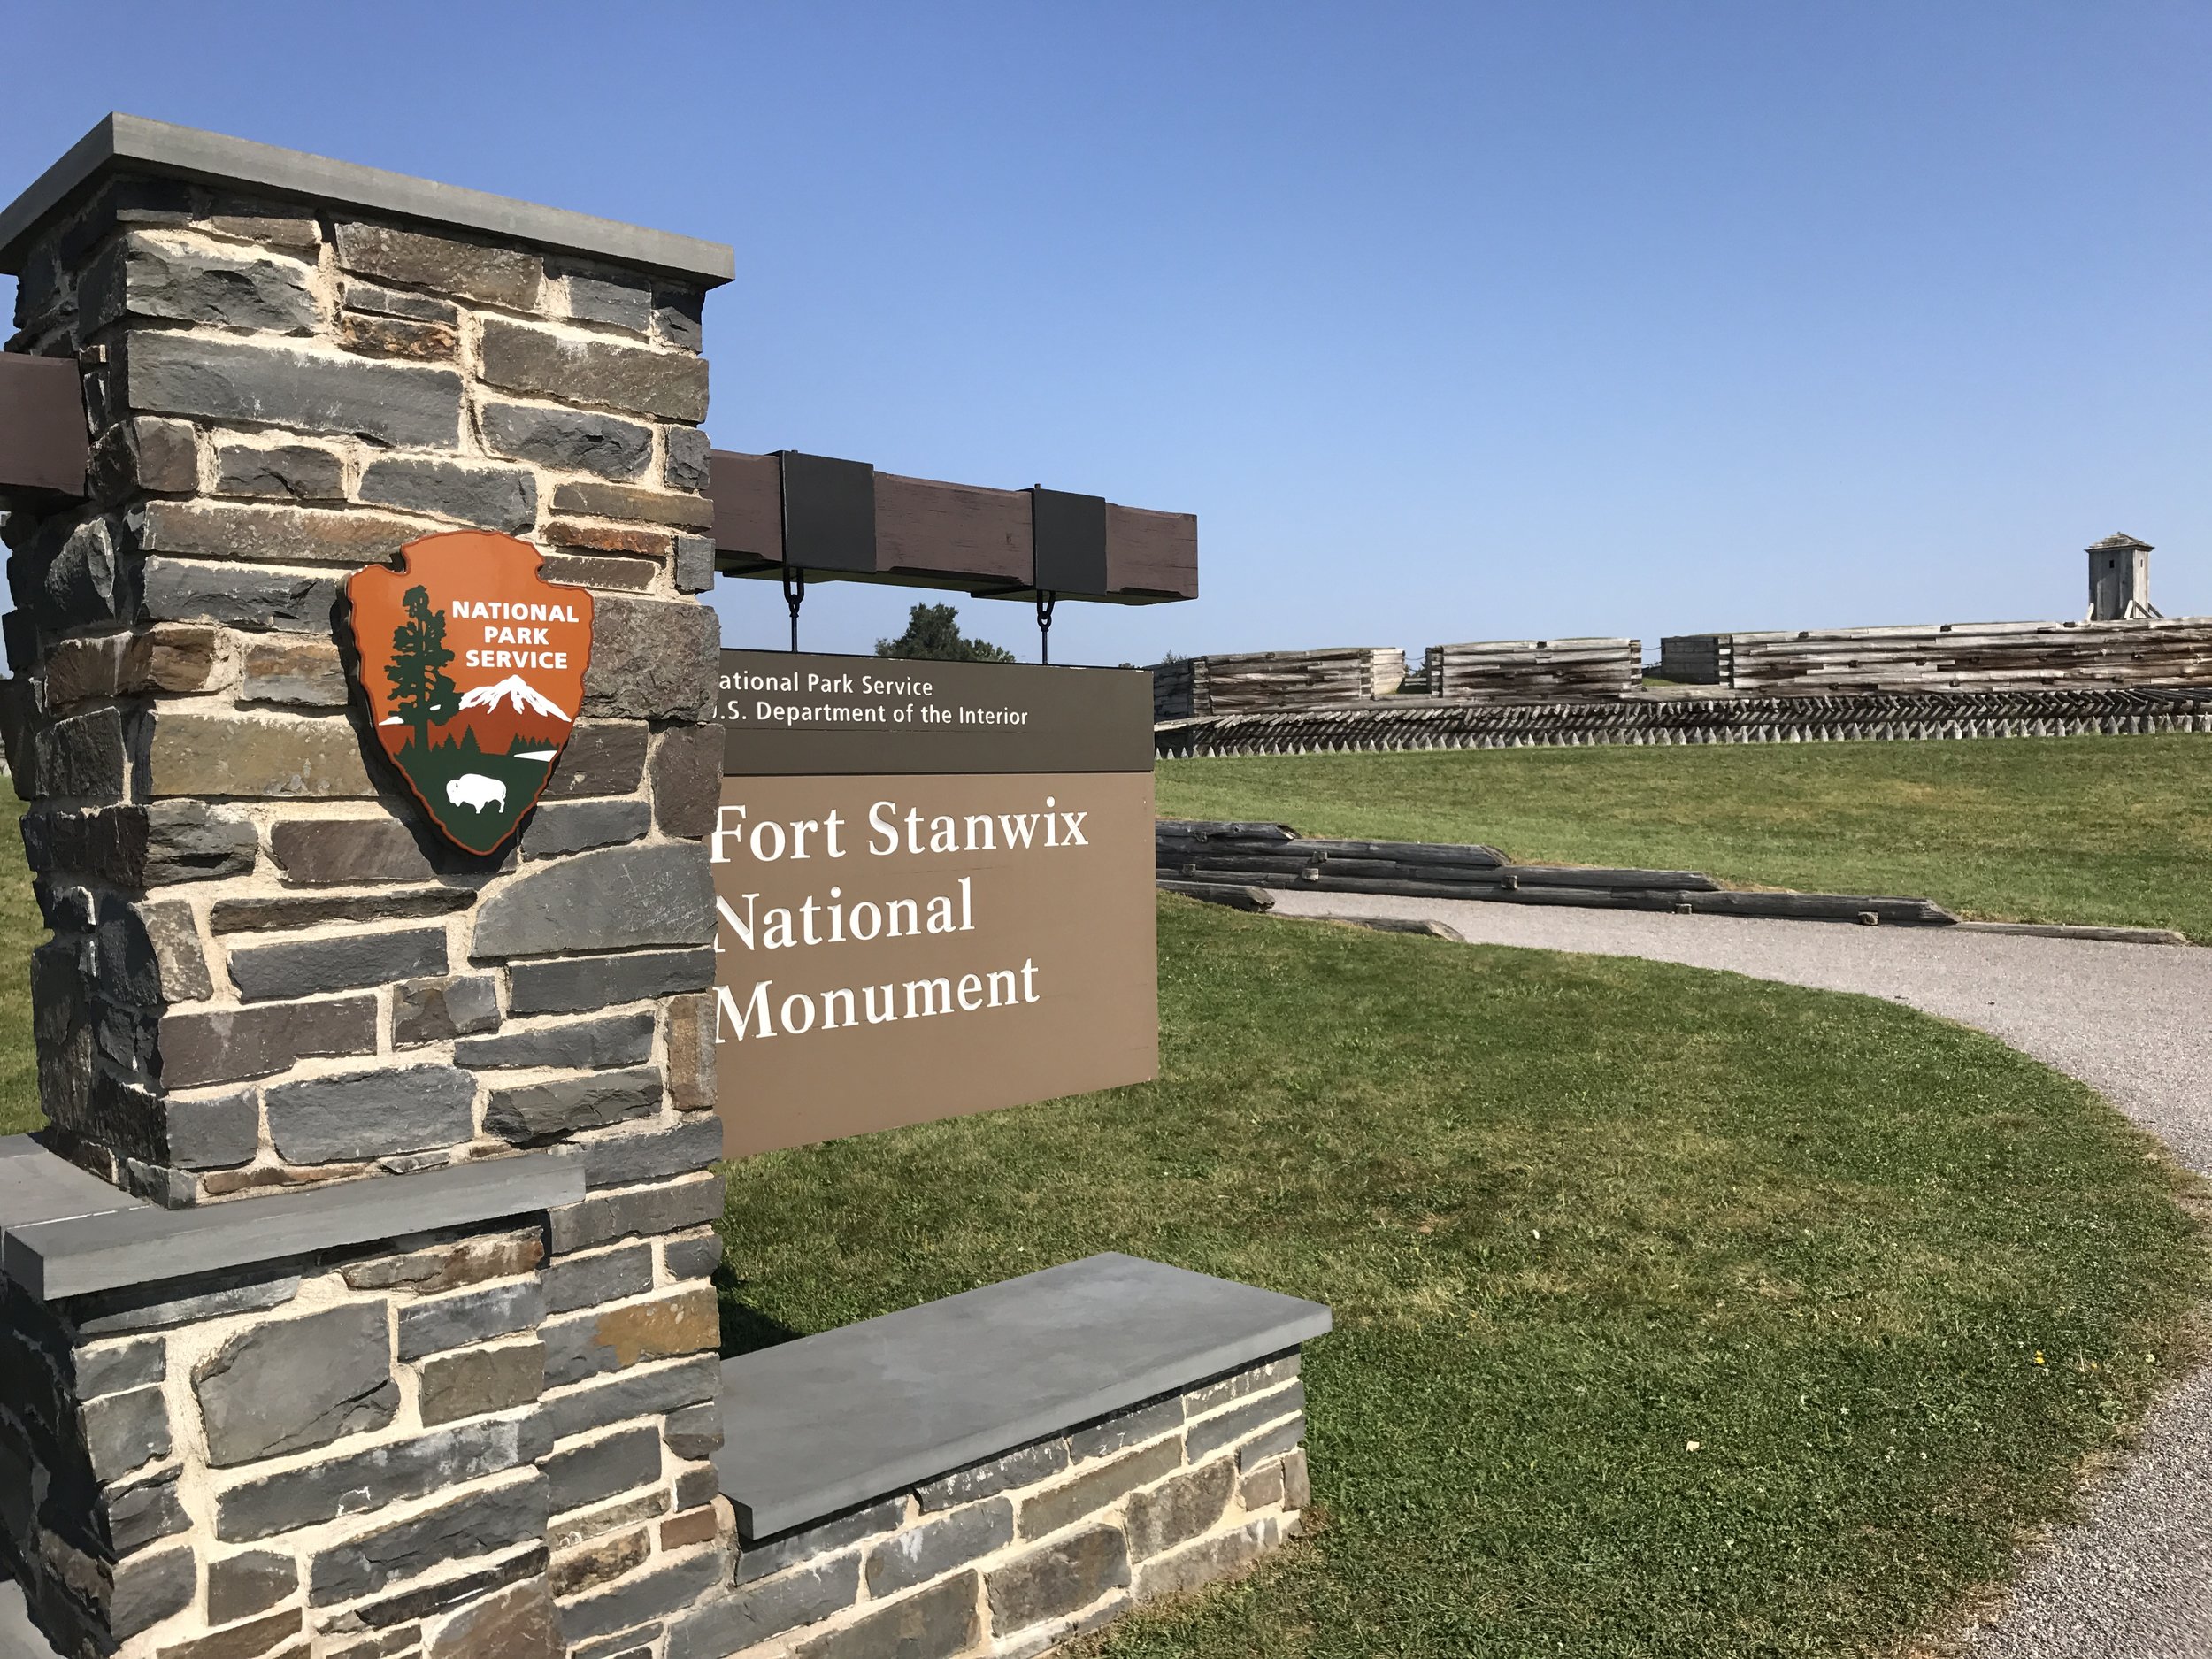 Historic Fort Stanwix